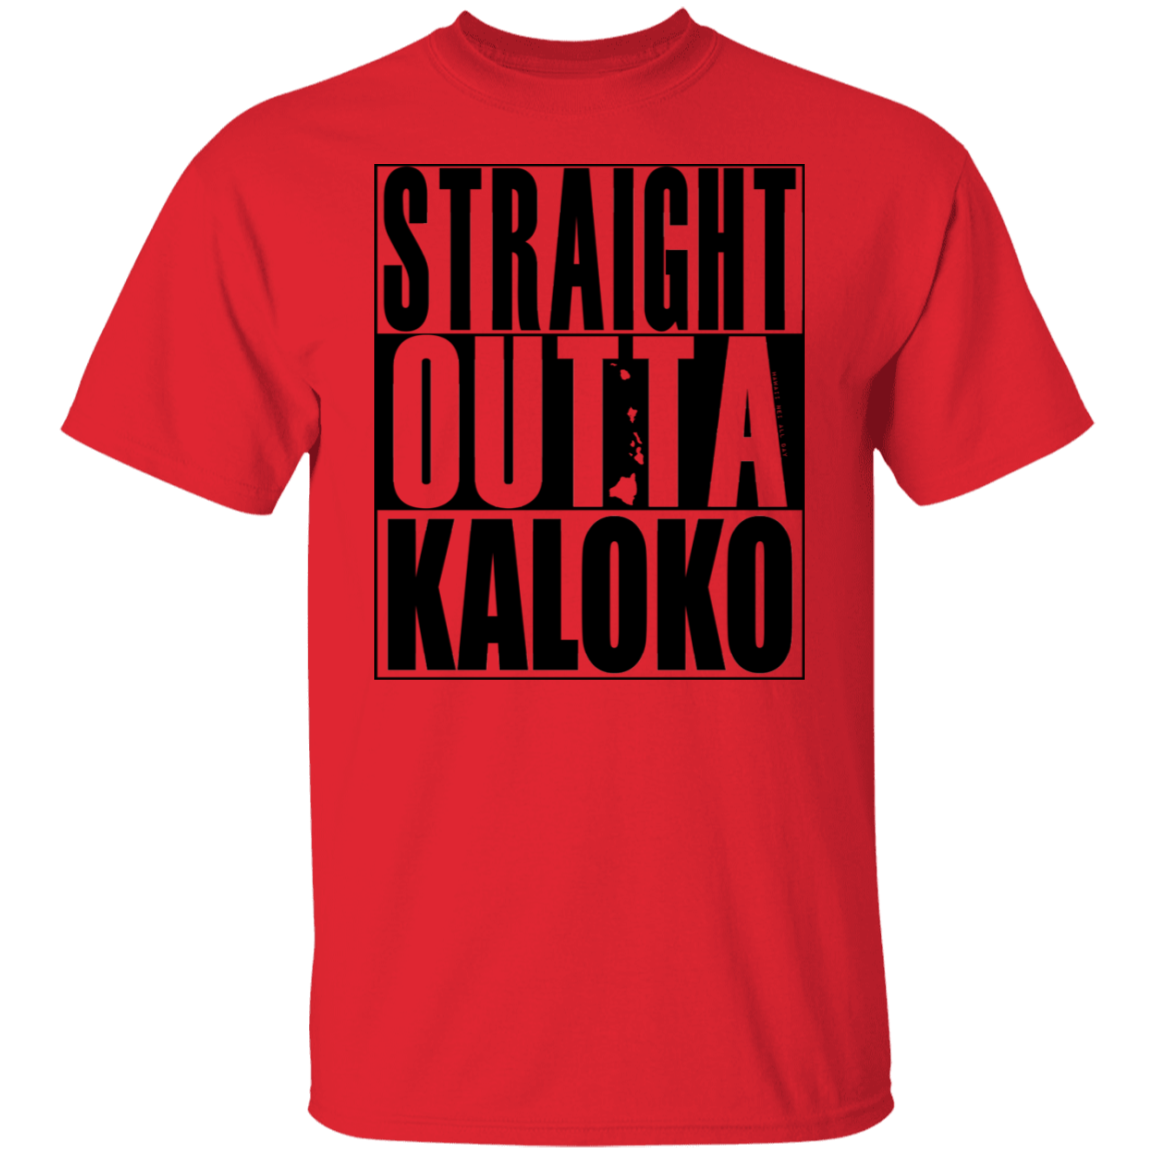 Straight Outta Kaloko(black ink) T-Shirt